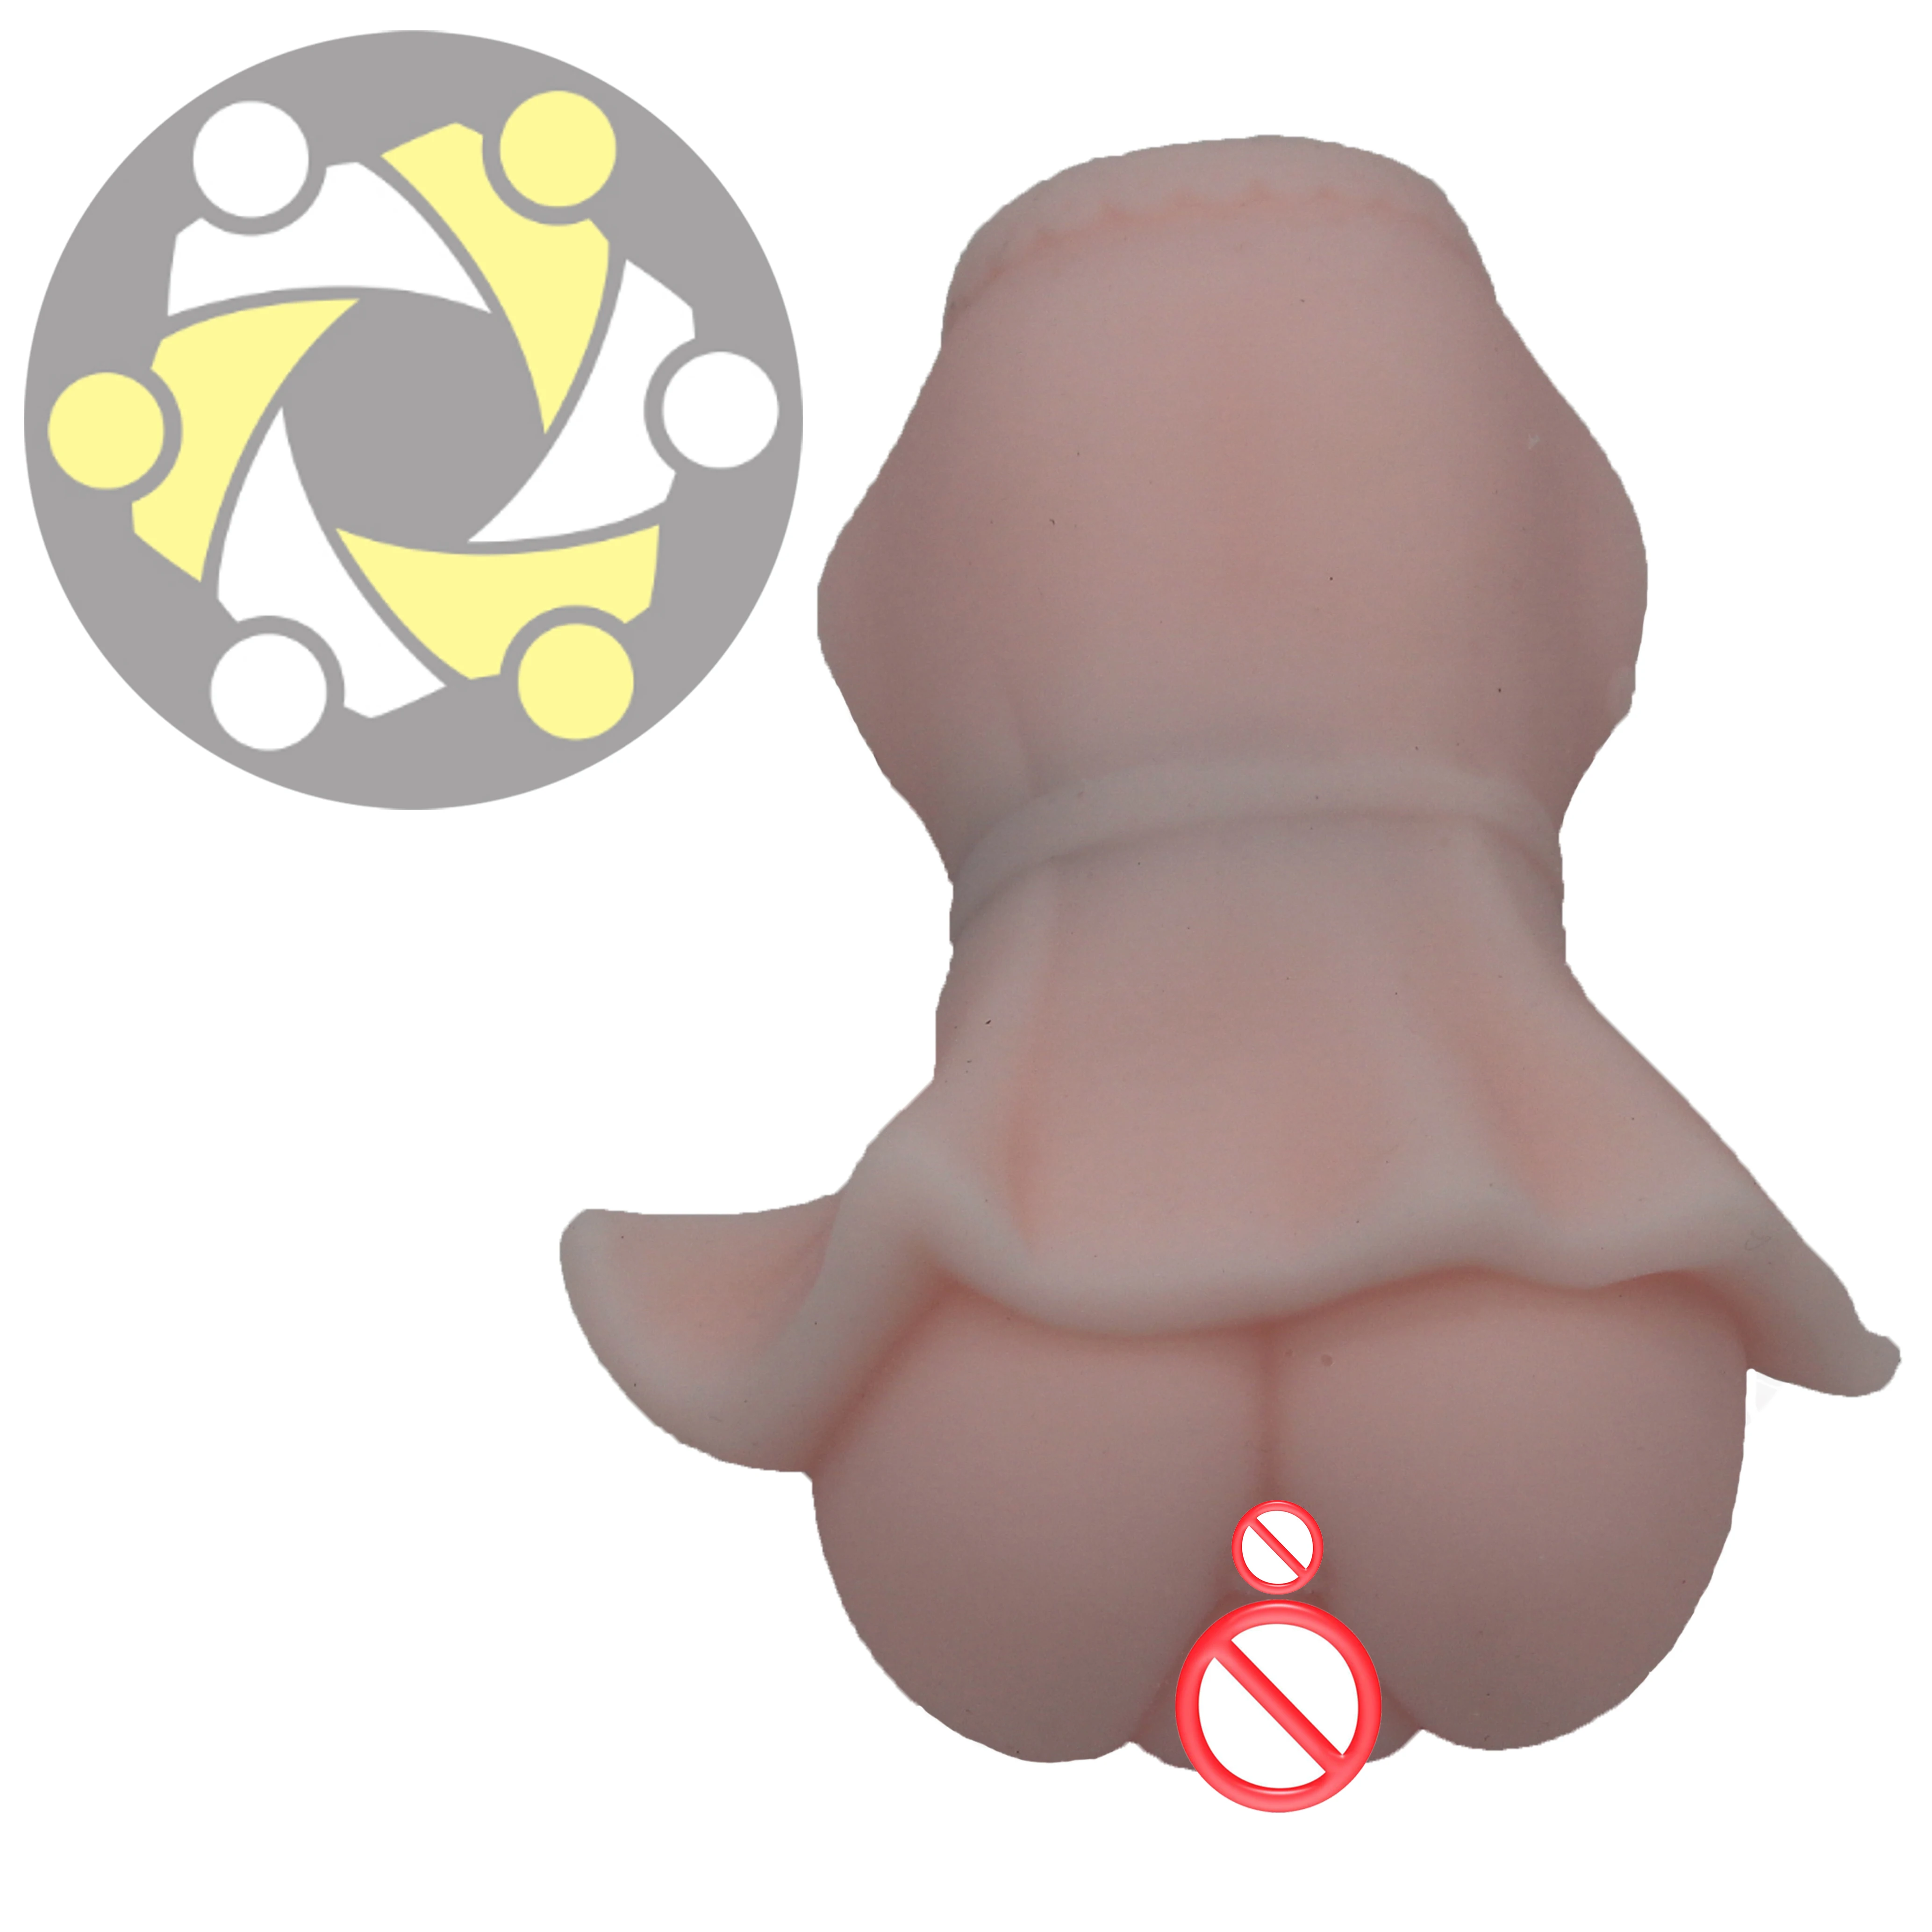 
Artificial Female Organ Silicone Education Vagina Model 